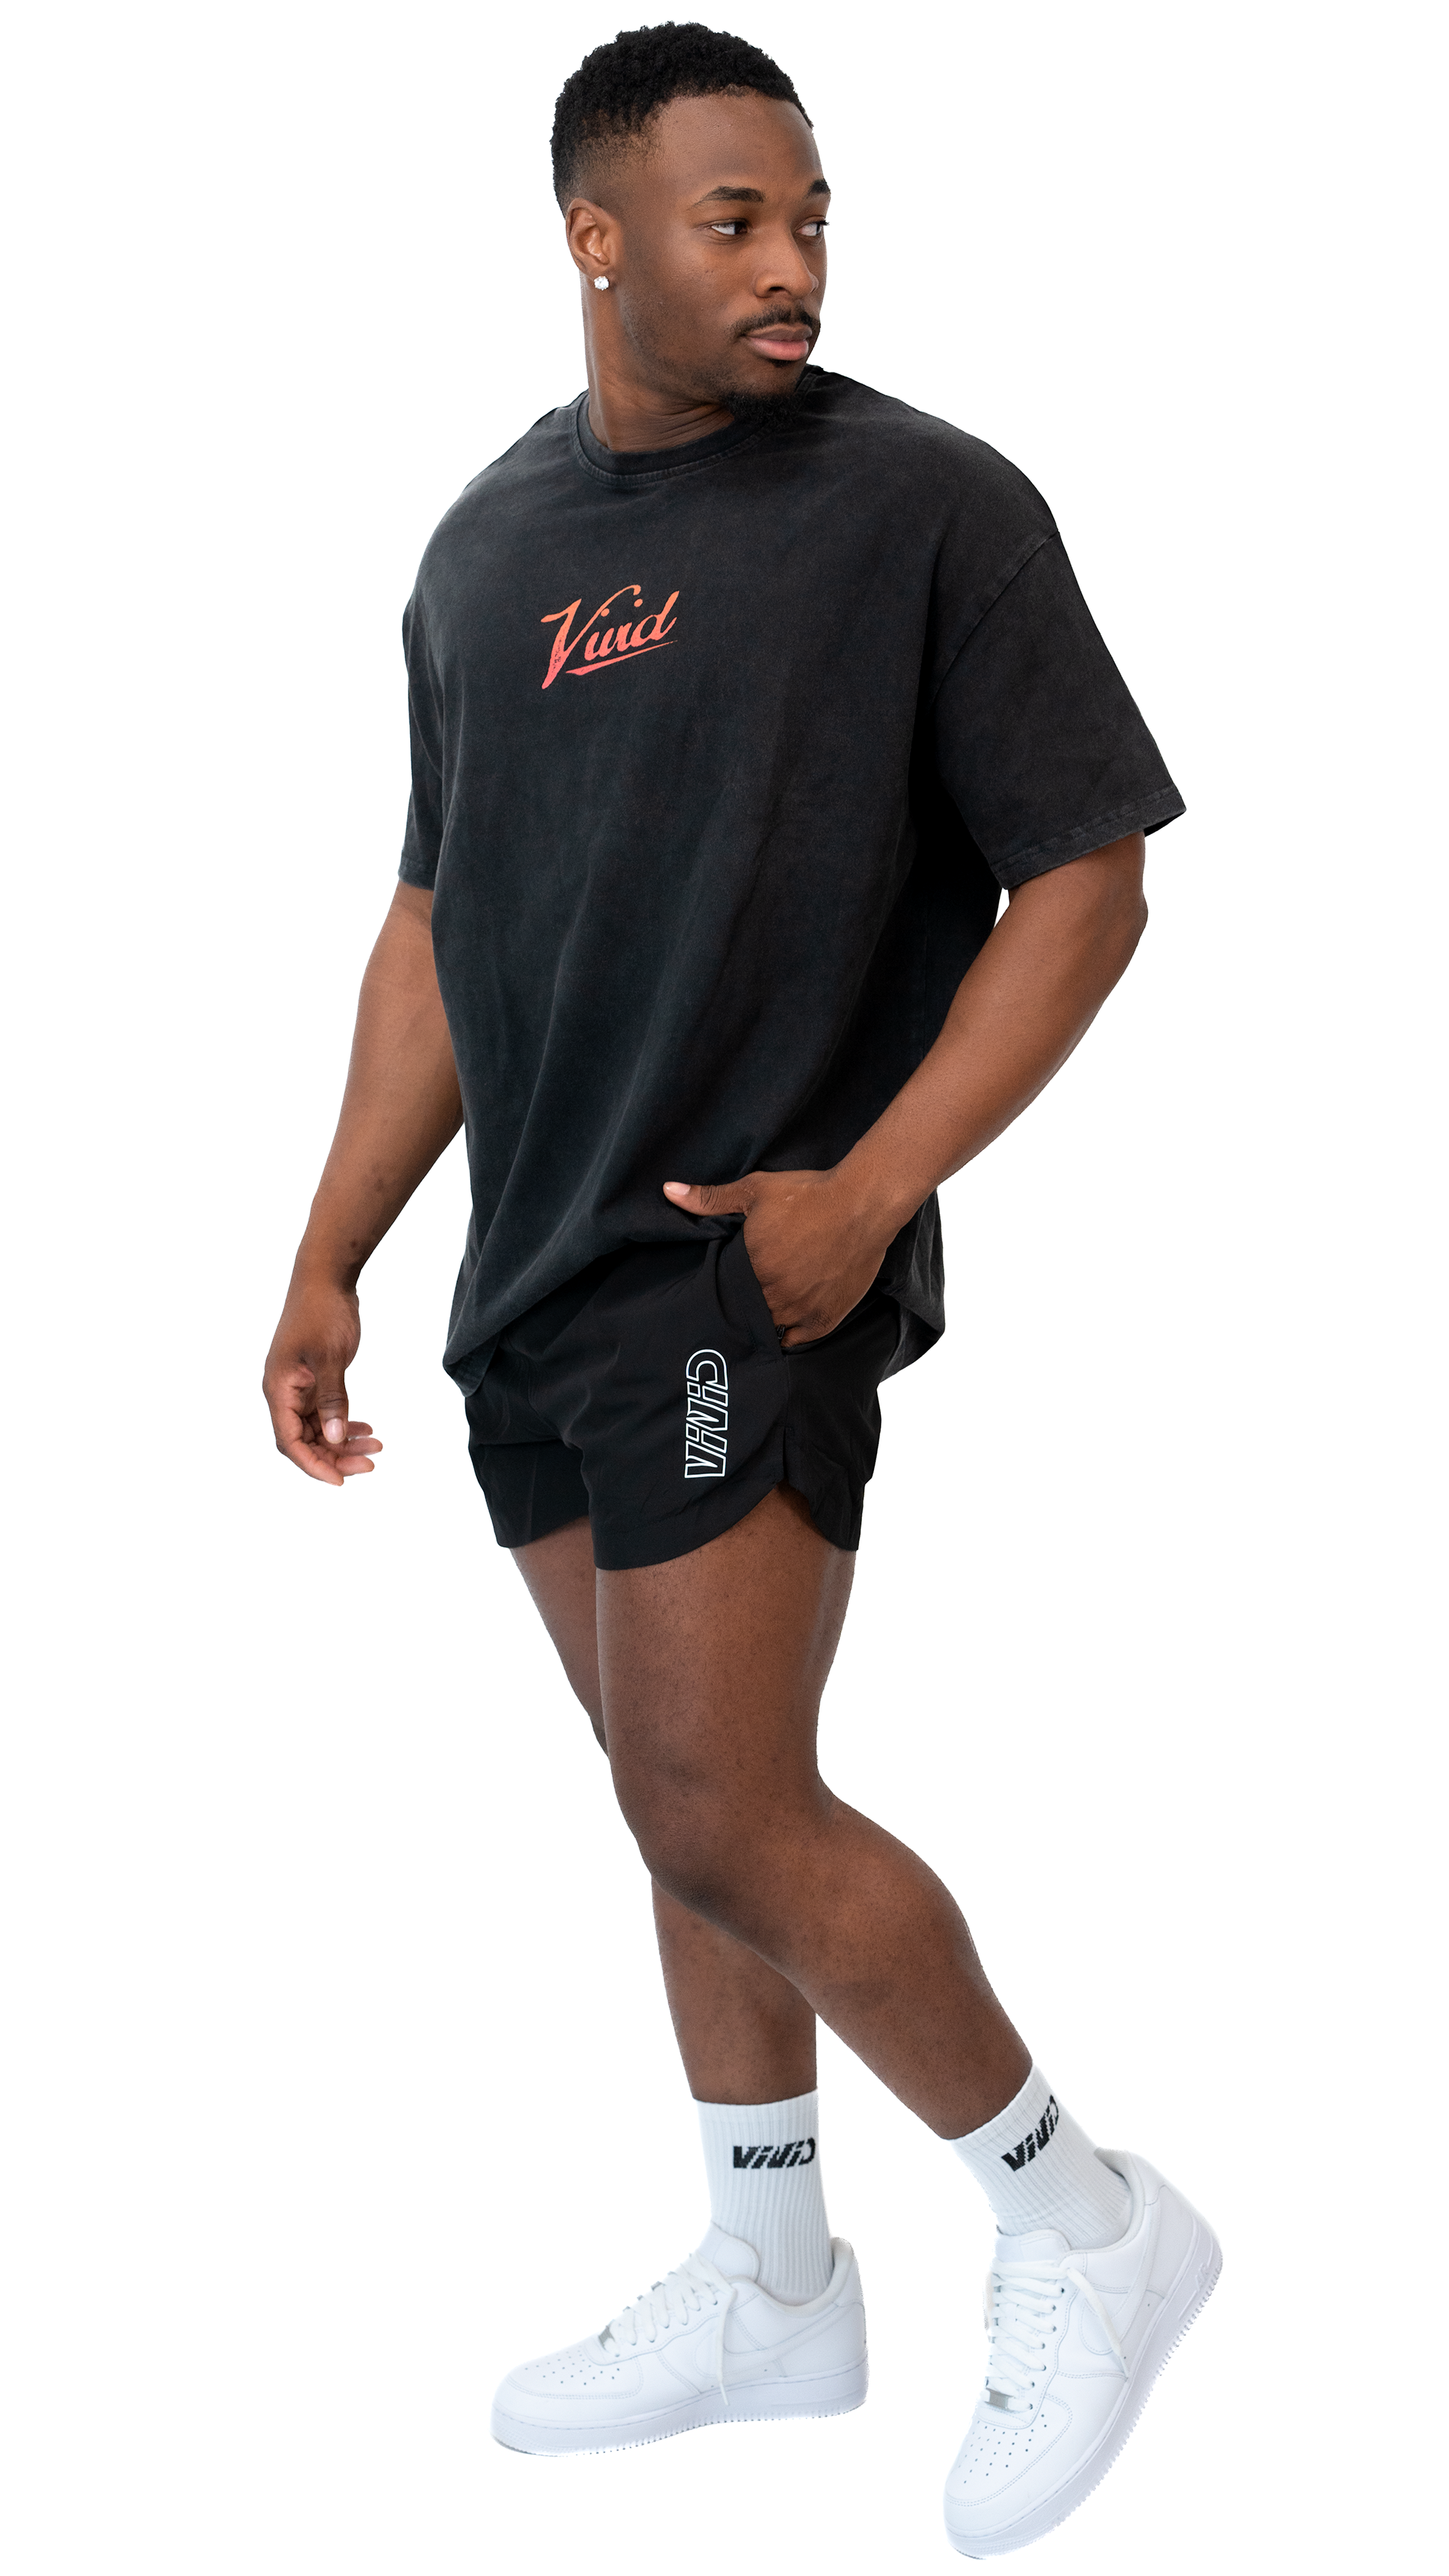 7 Inch Quad Shorts - Black